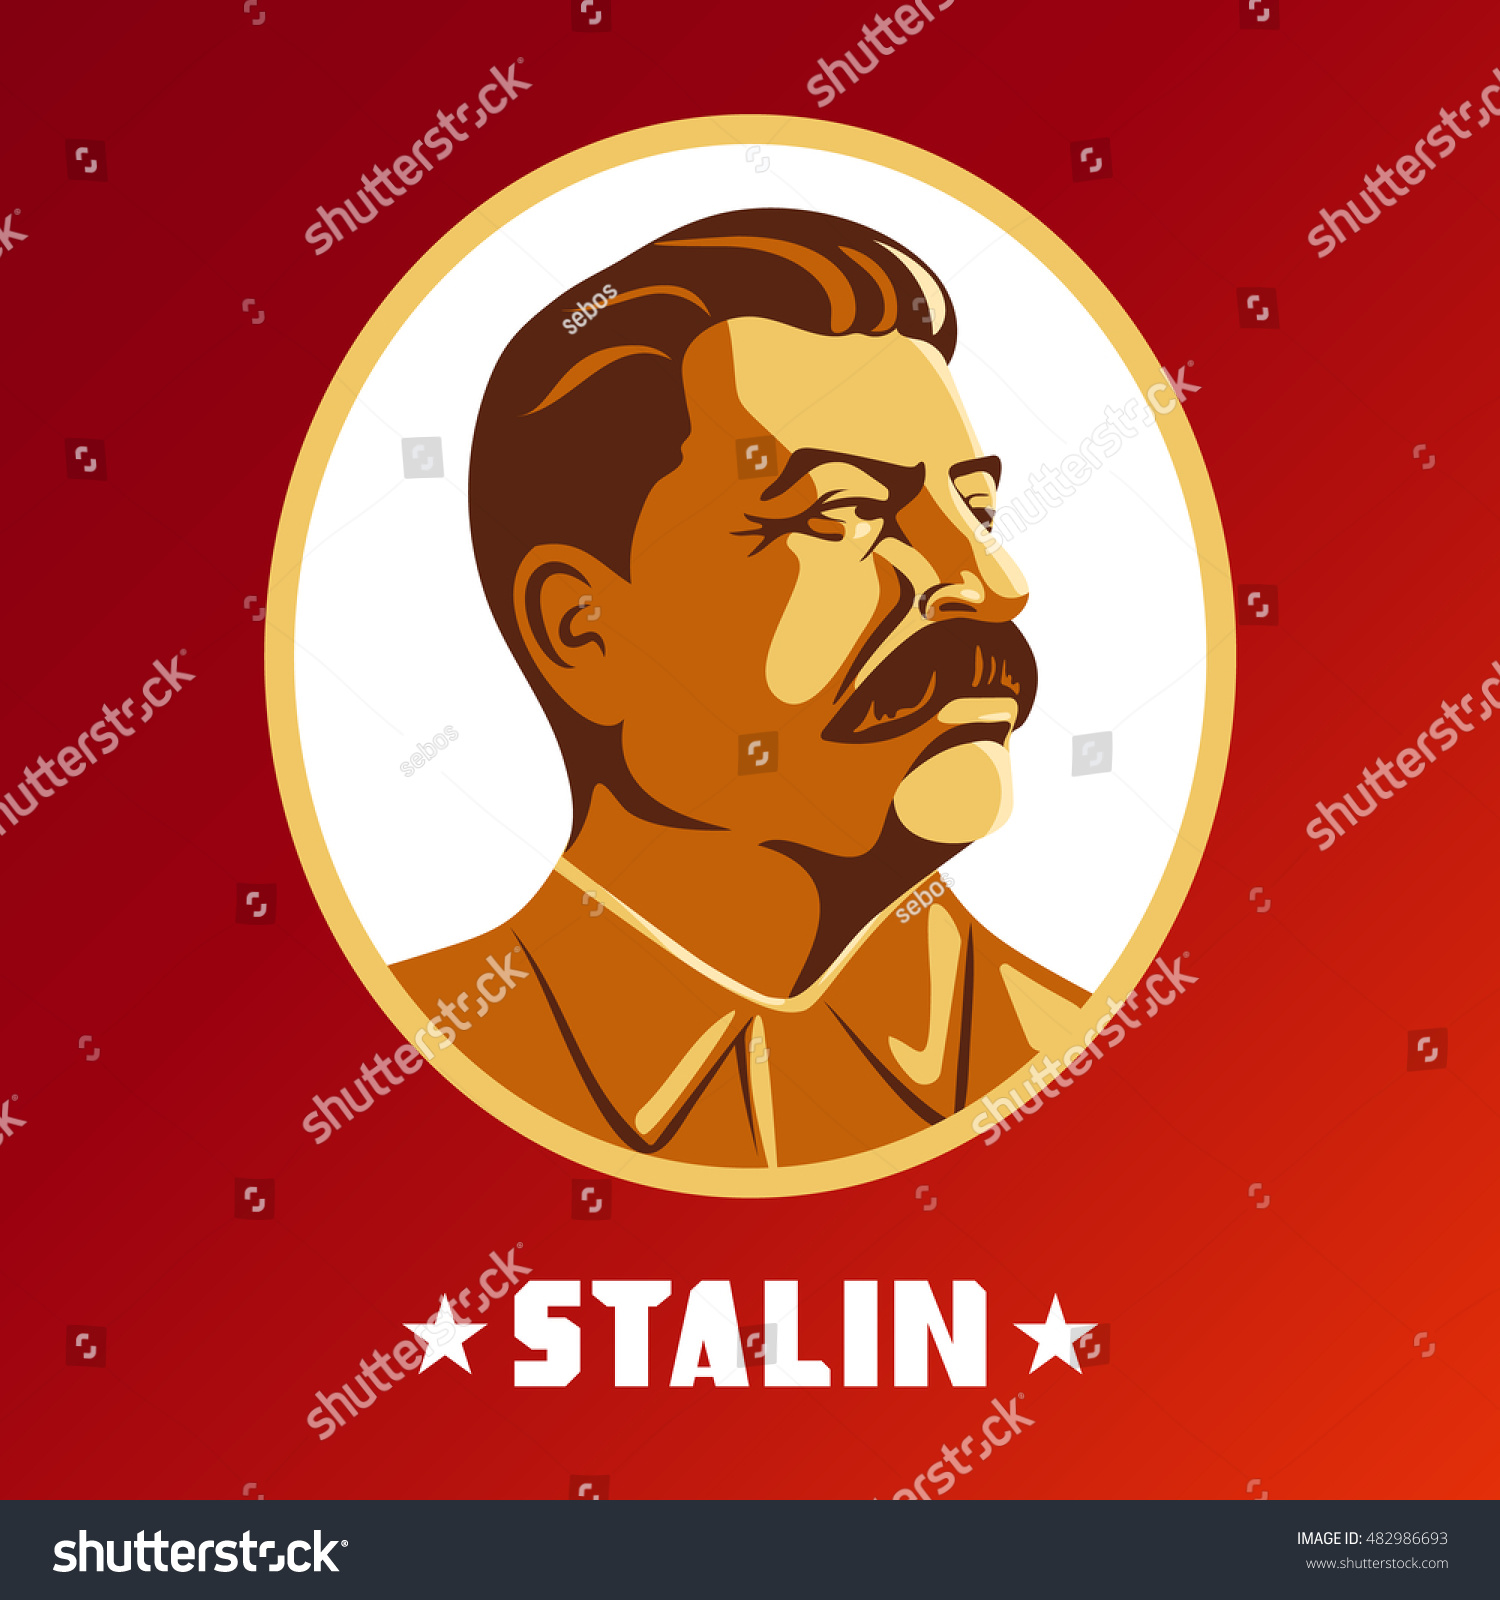 Portrait Joseph Stalin Poster Stylized Sovietstyle Stock ...